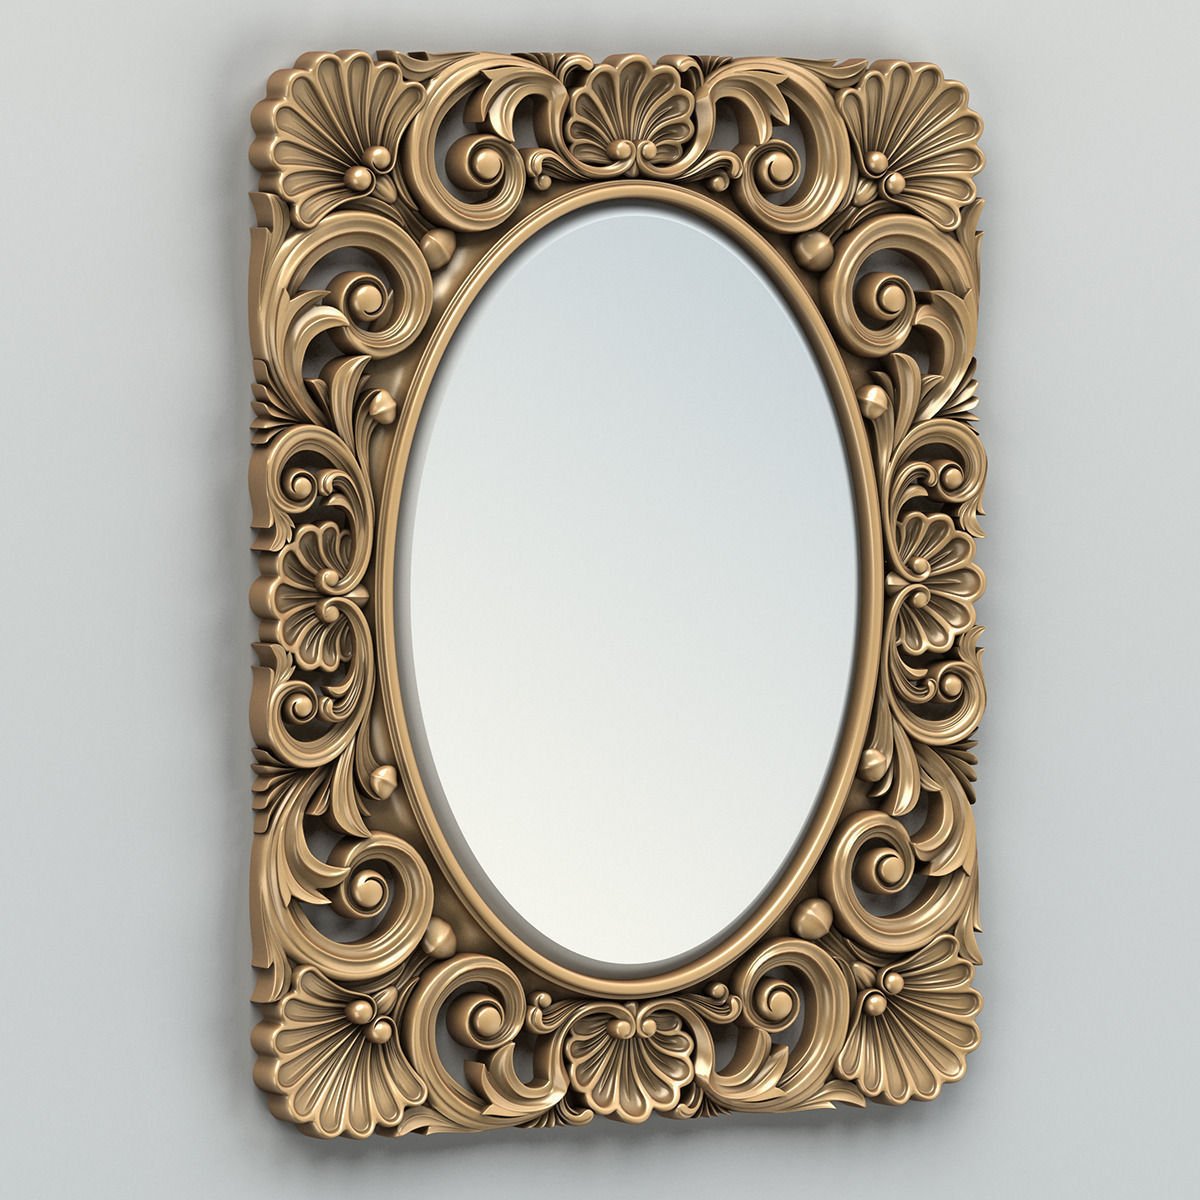 Зеркало резьба. Рама для зеркала. Зеркало в резной раме. Рамка для зеркала. Резьба по дереву рамка для зеркала.